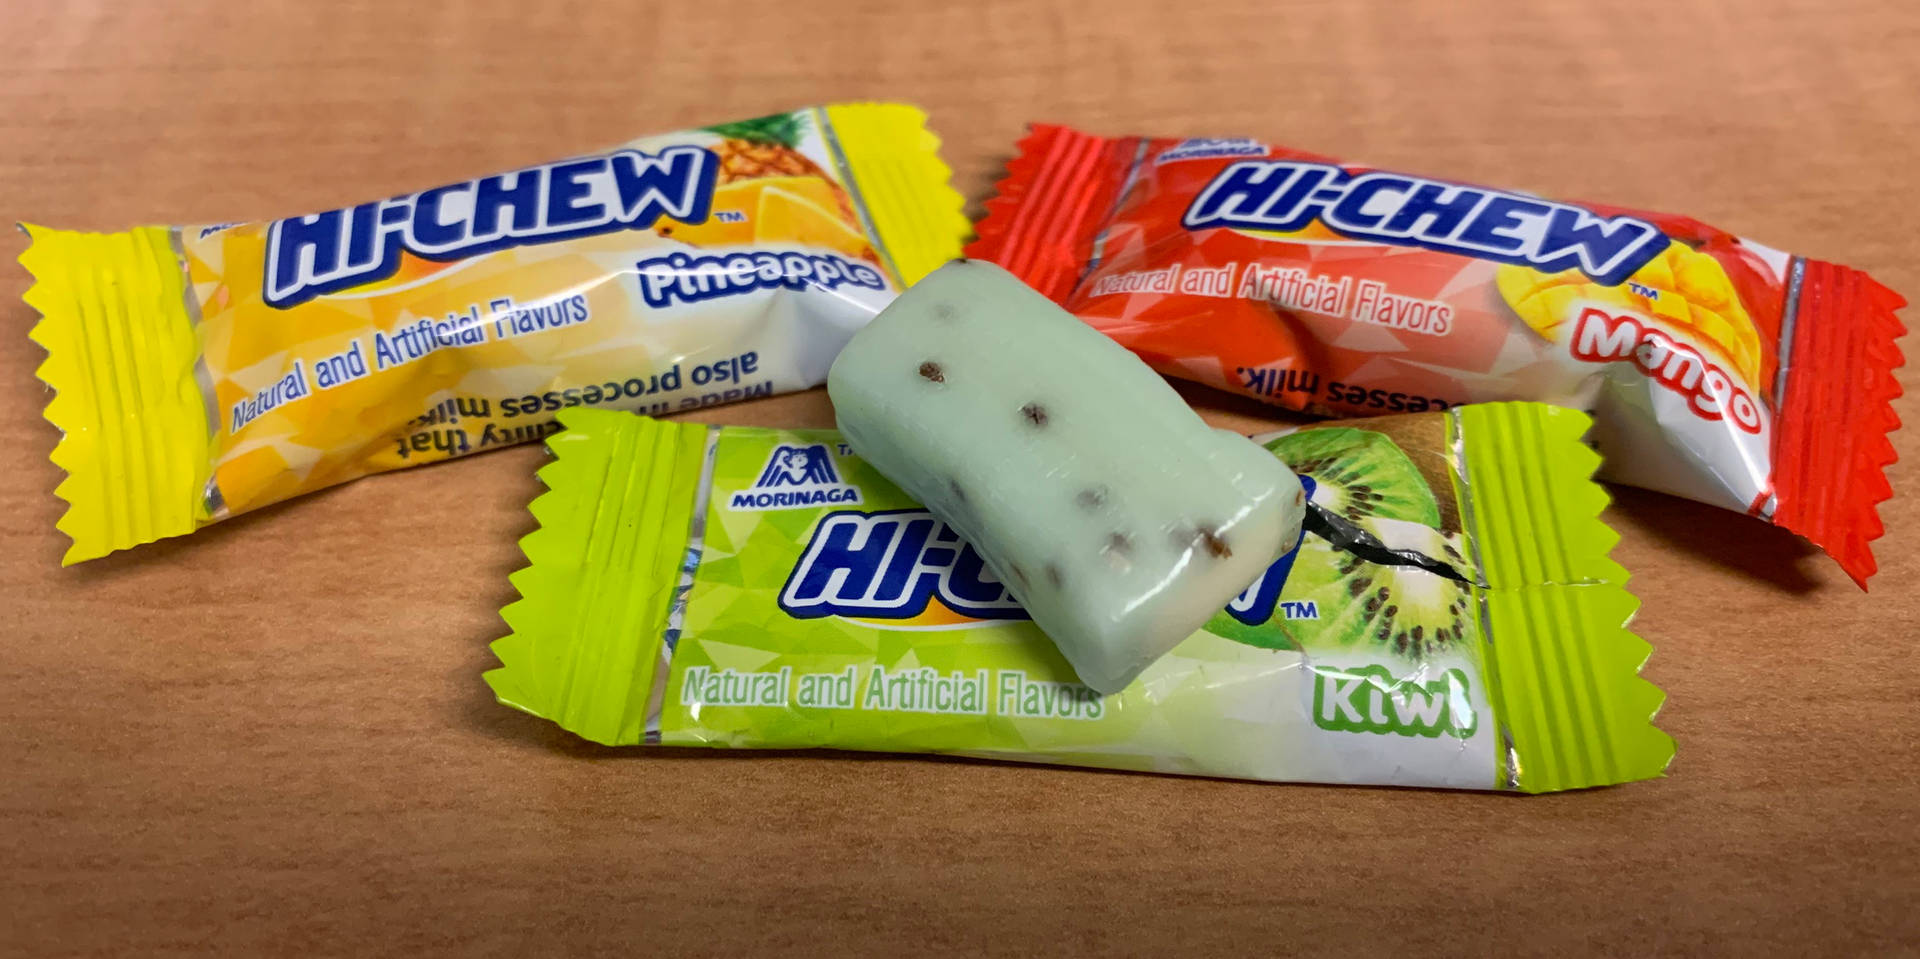 Chewyhi-chew Candies - width=